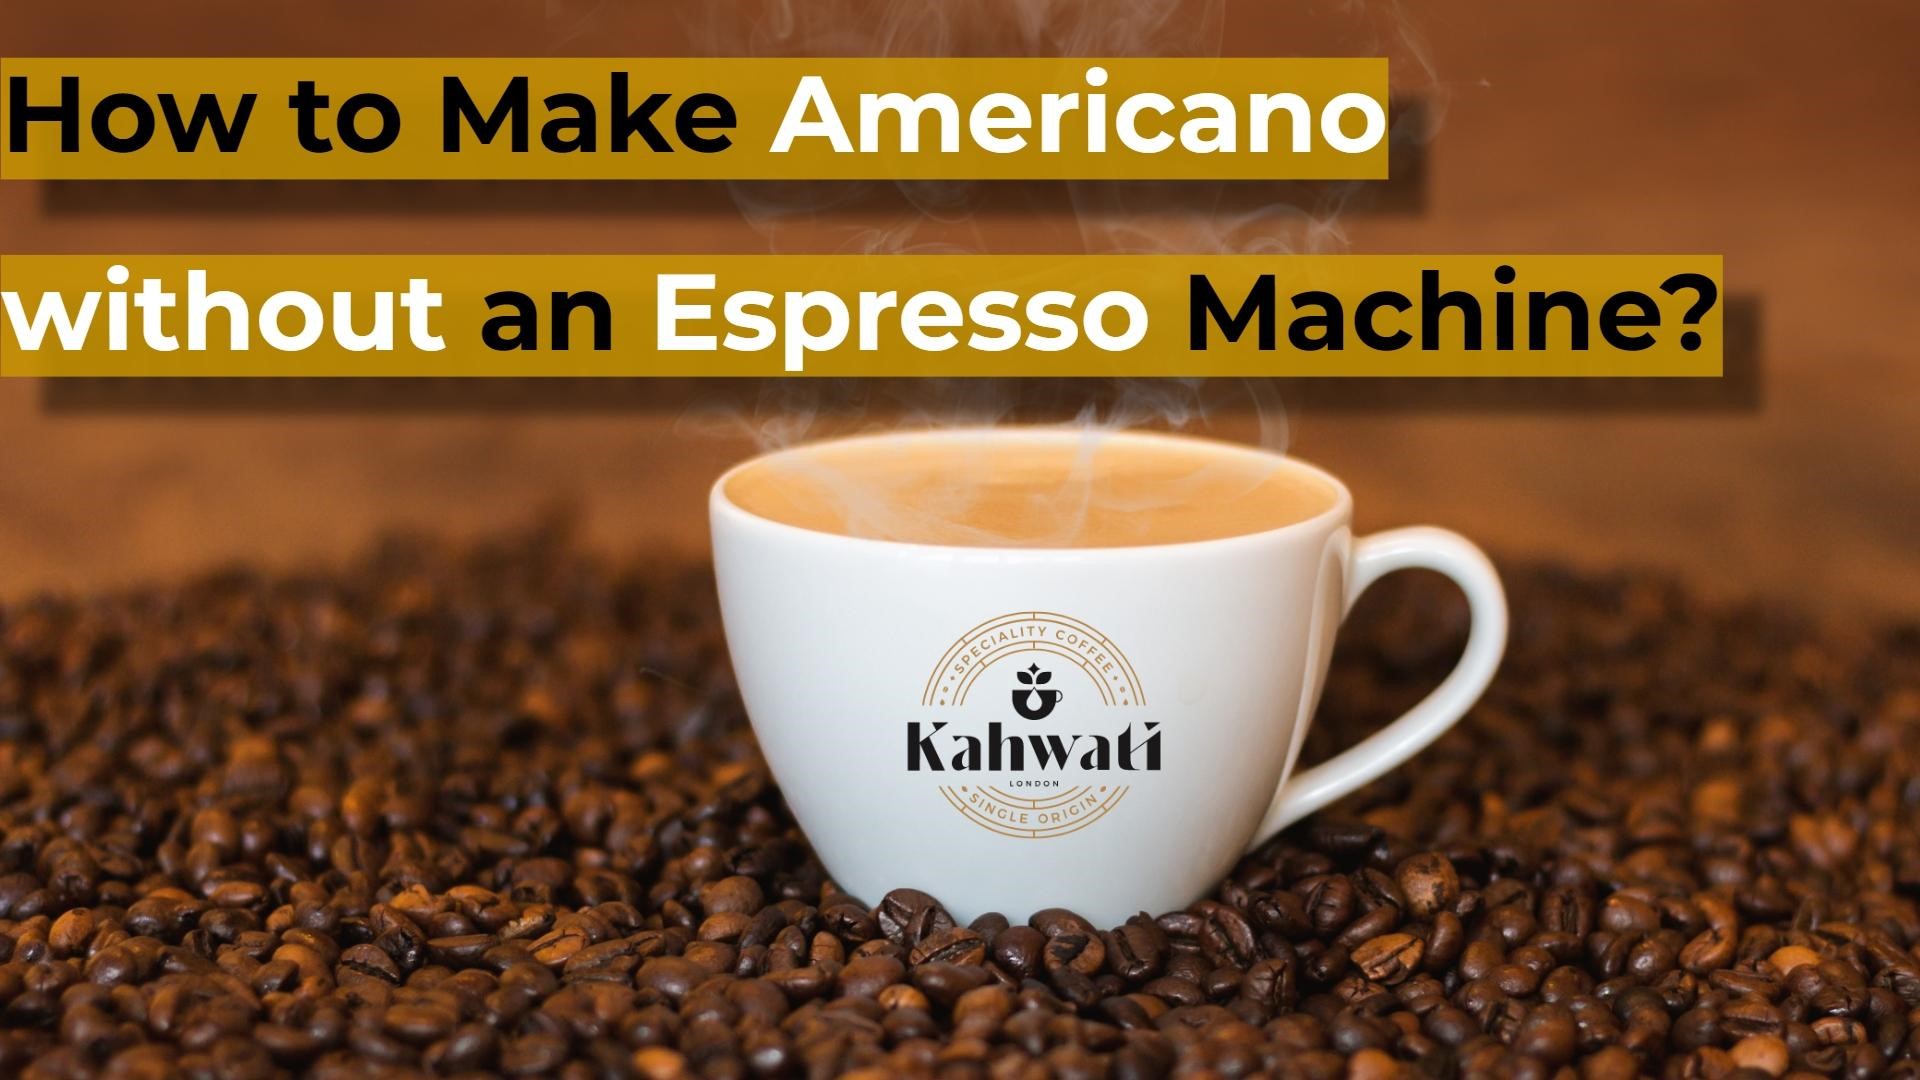 How to Make Americano without Espresso Machine